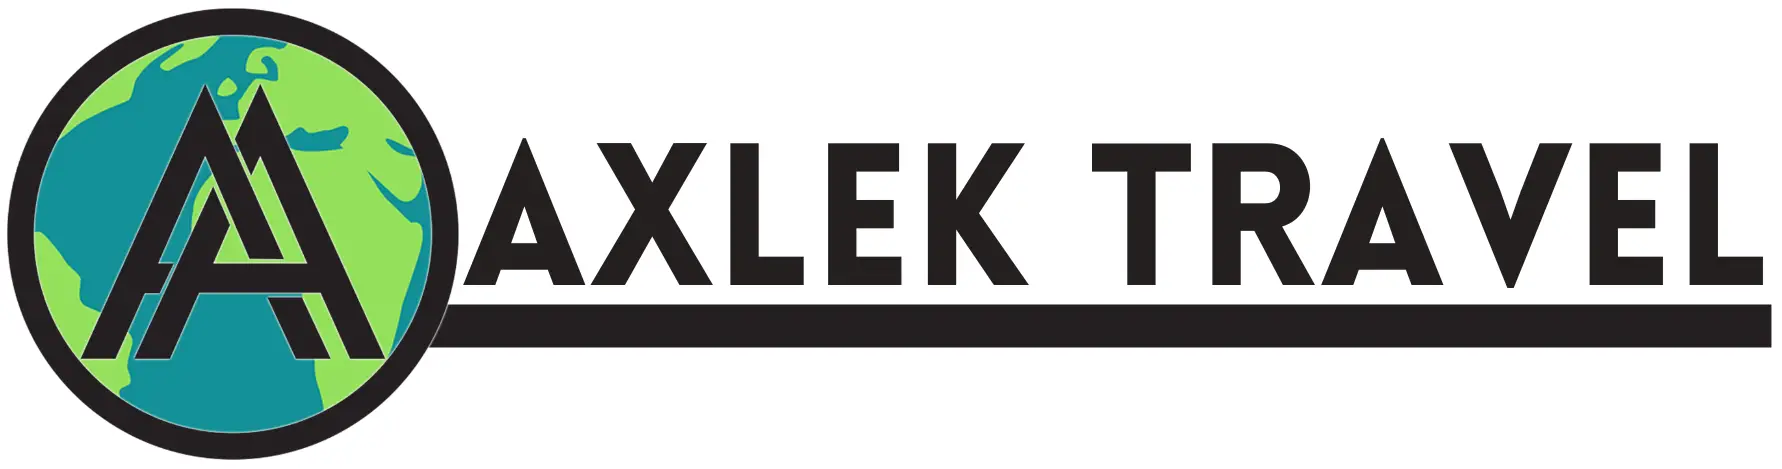 Axlek Travel